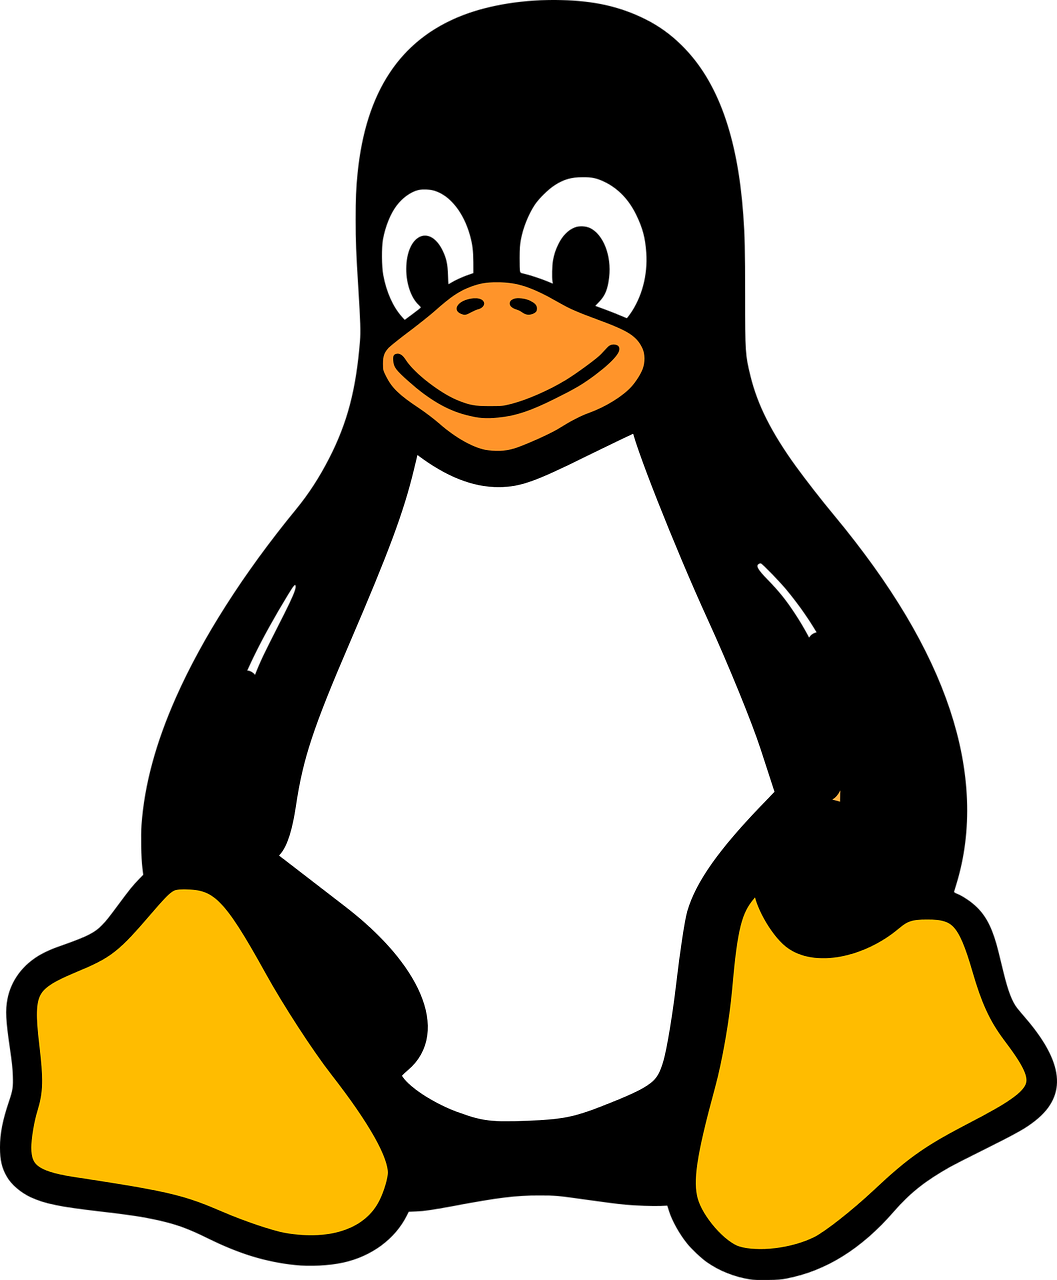 Linux mascot tux